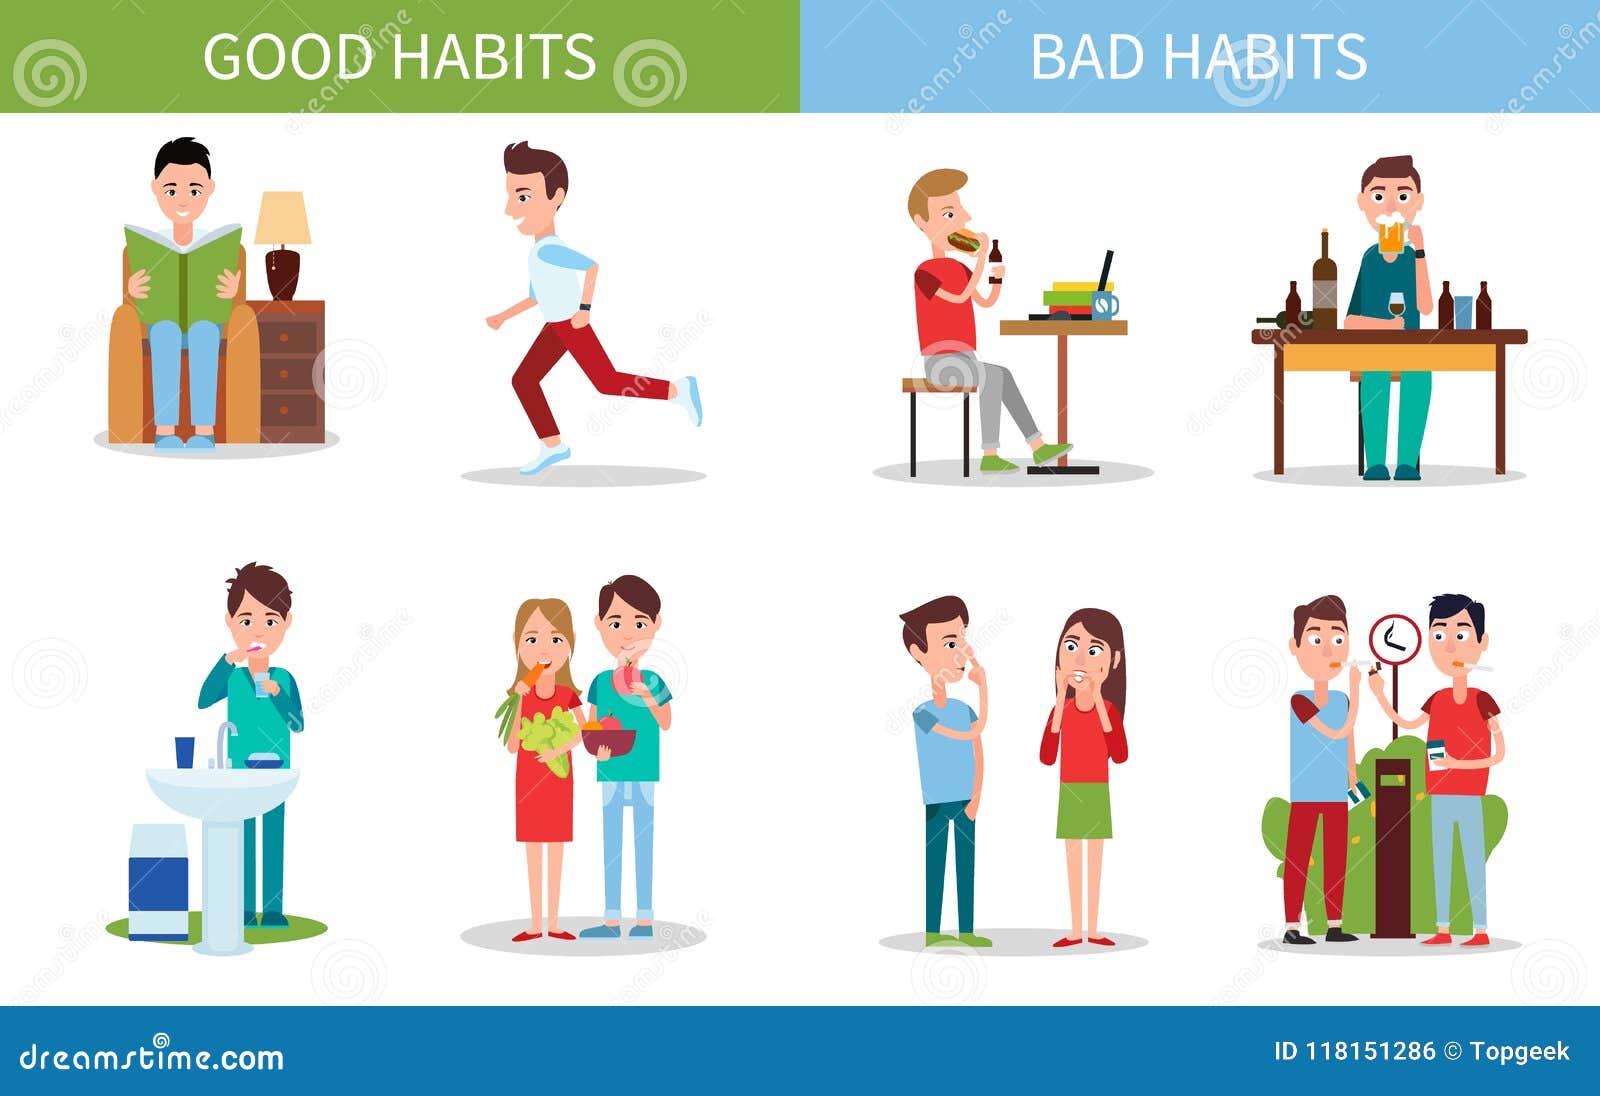 Better habits. Good and Bad Habits. Плохие привычки векторные иллюстрации. Good Habits Bad Habits. Полезные привычки вектор.